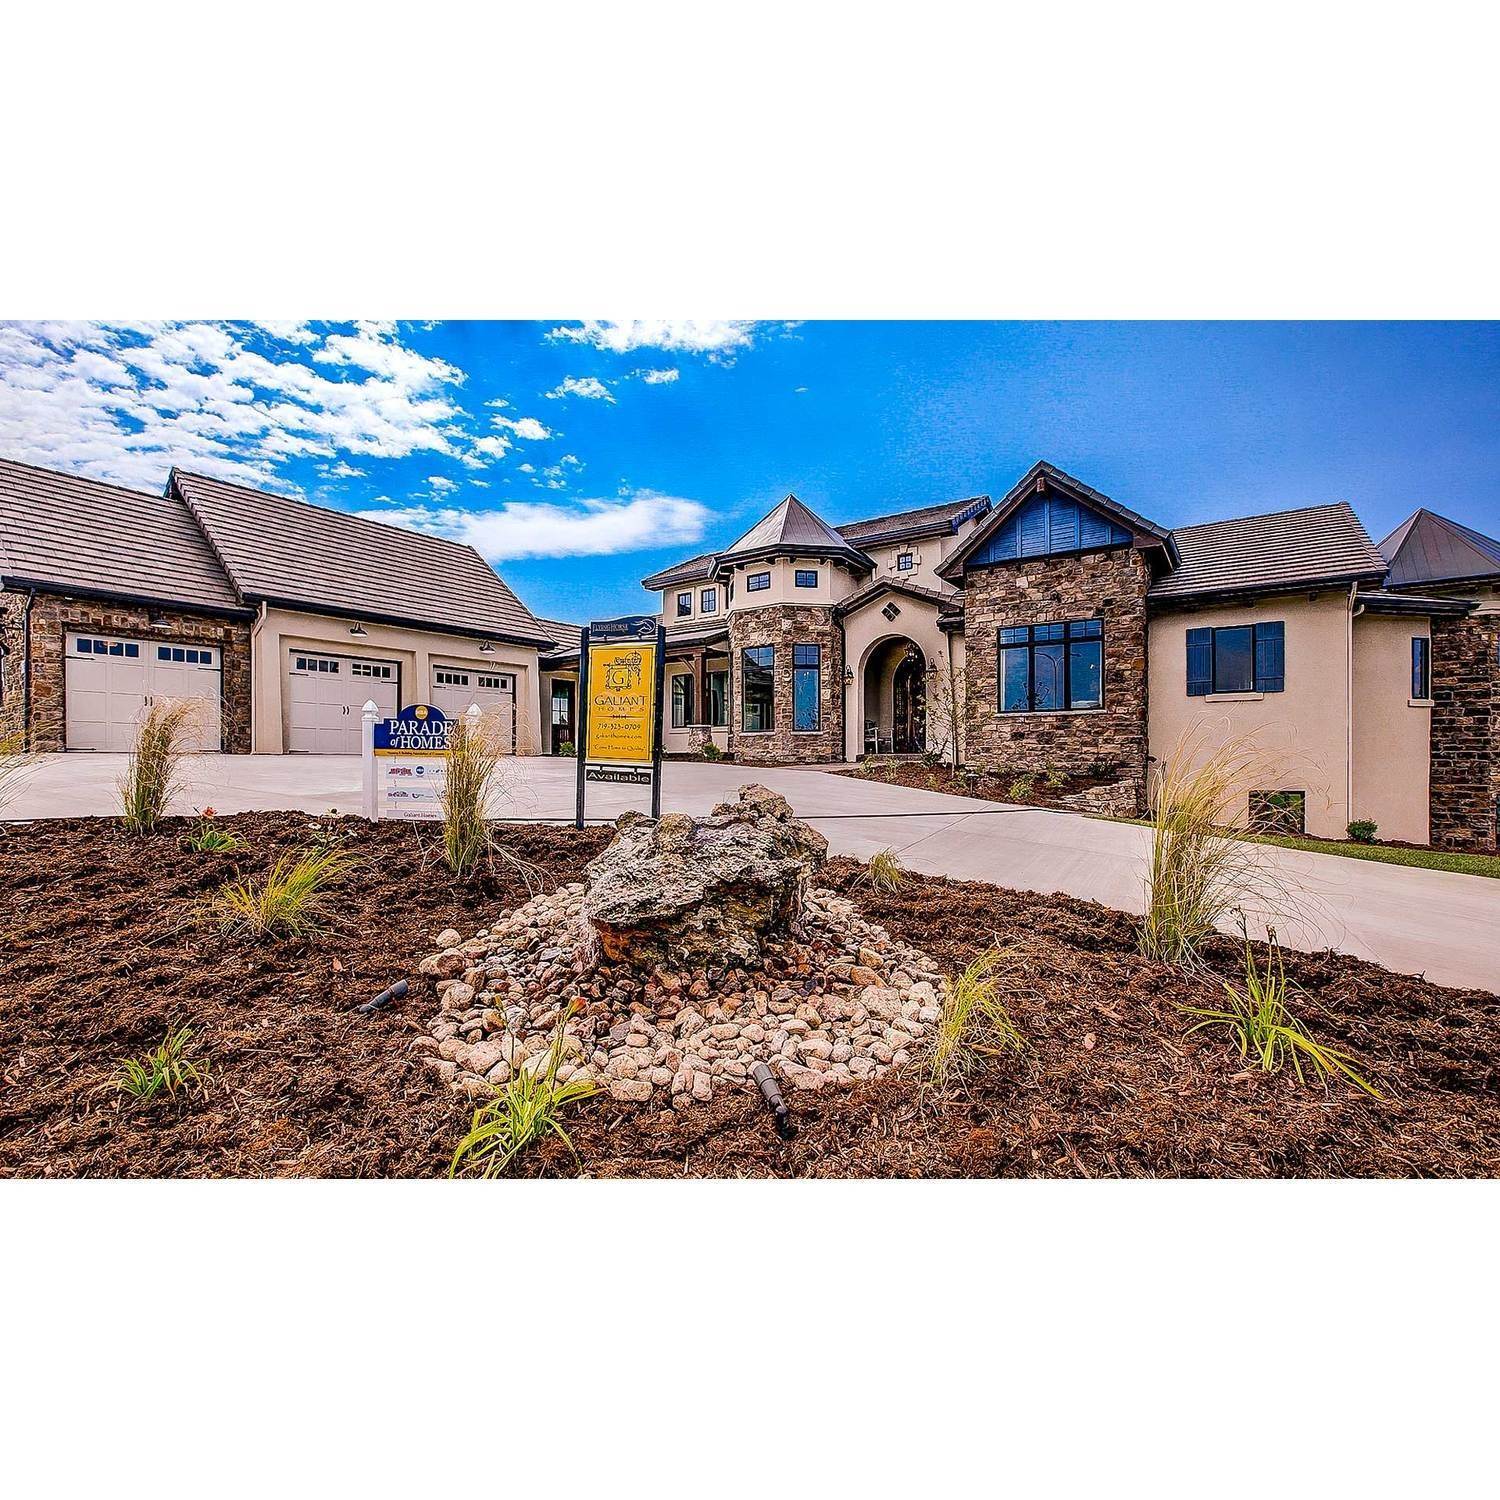 19. Galiant Homes xây dựng tại 4783 Farmingdale Dr, Colorado Springs, CO 80918